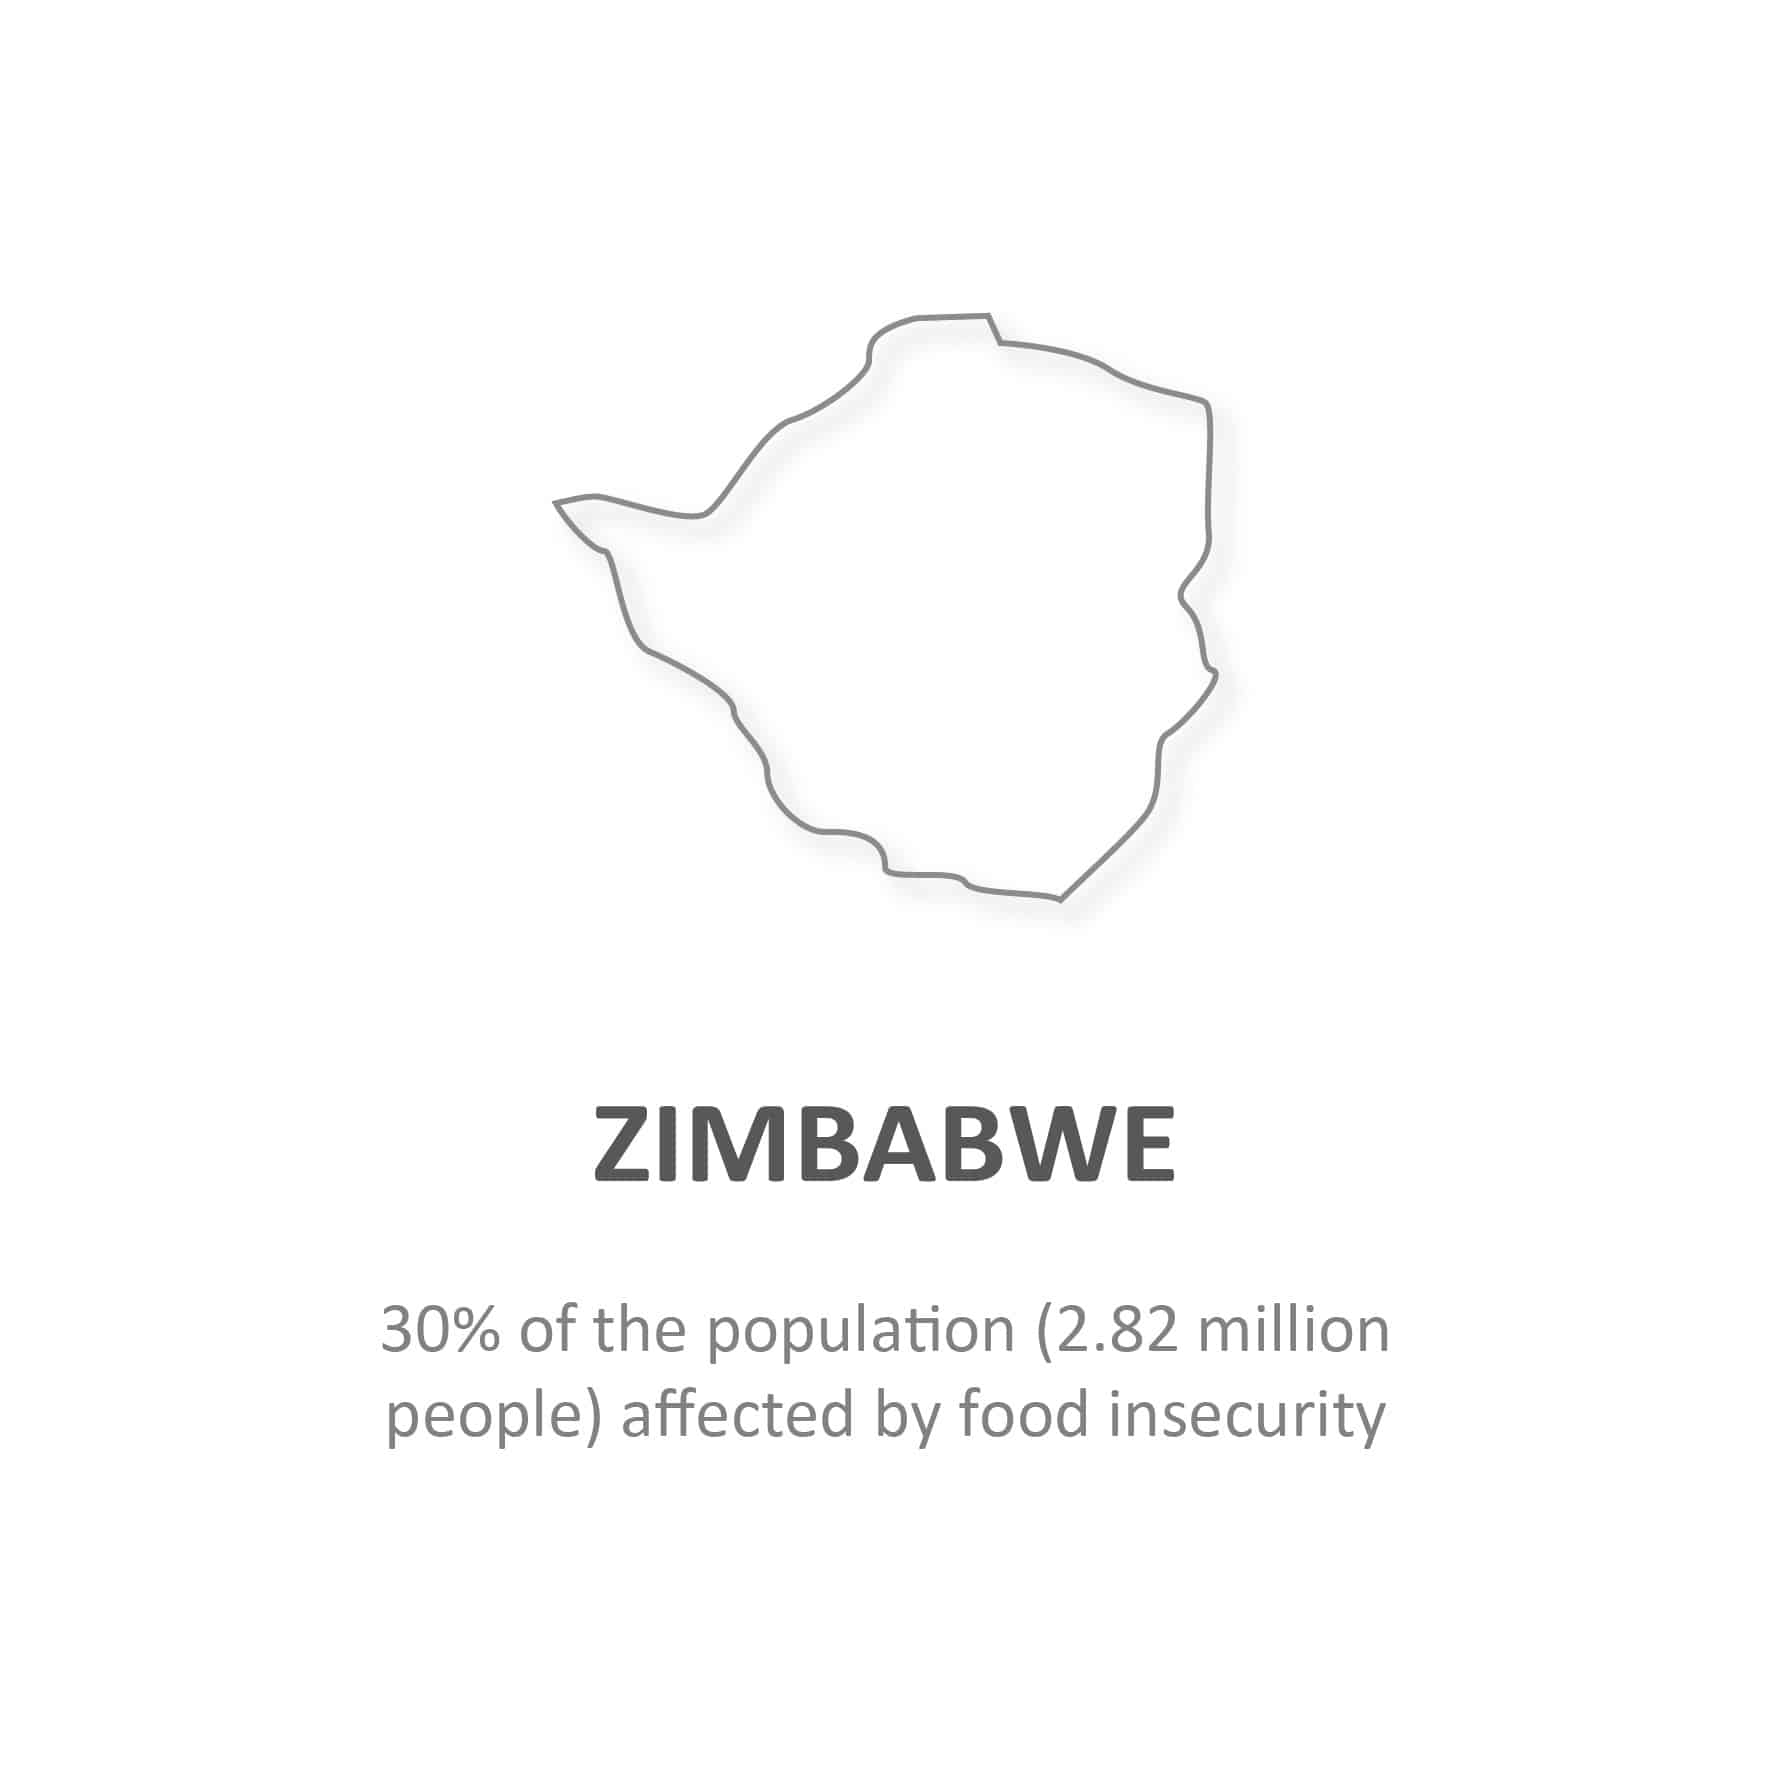 Statistics for Zimbabwe